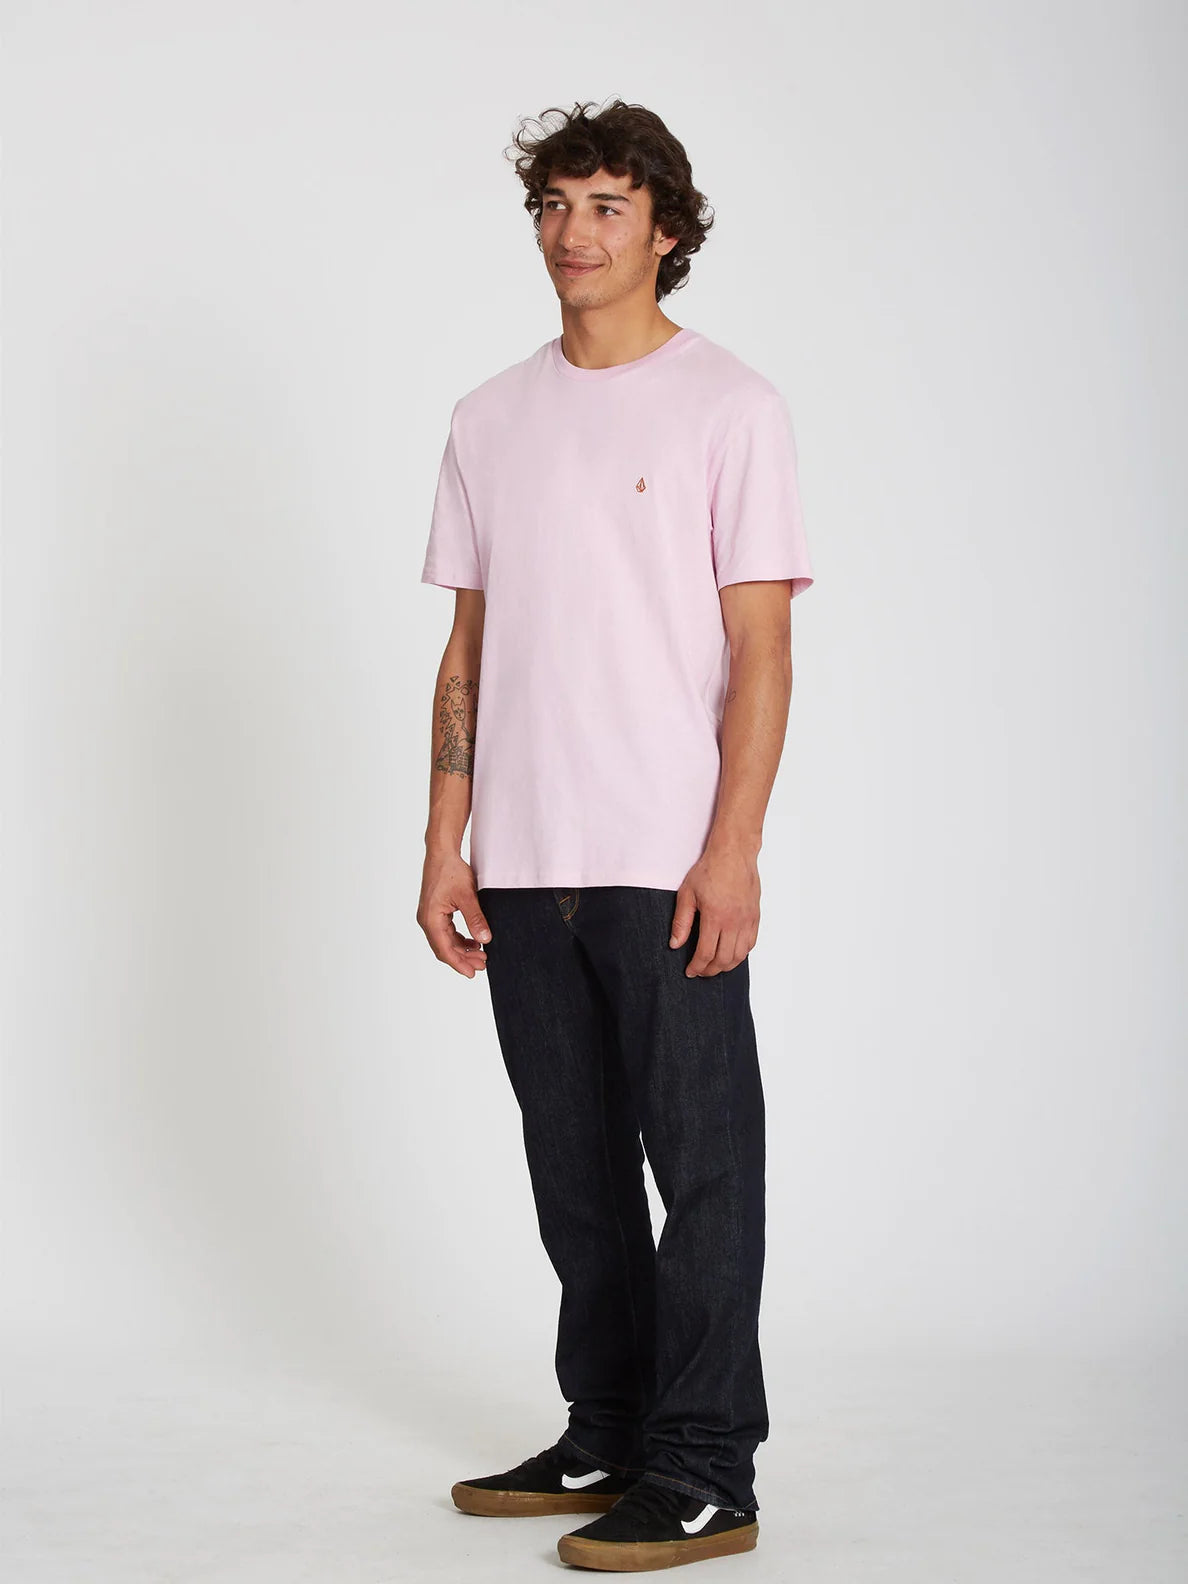 Camiseta Volcom Stone Blanks Paradise Pink | Camisetas de hombre | Camisetas manga corta de hombre | Volcom Shop | surfdevils.com